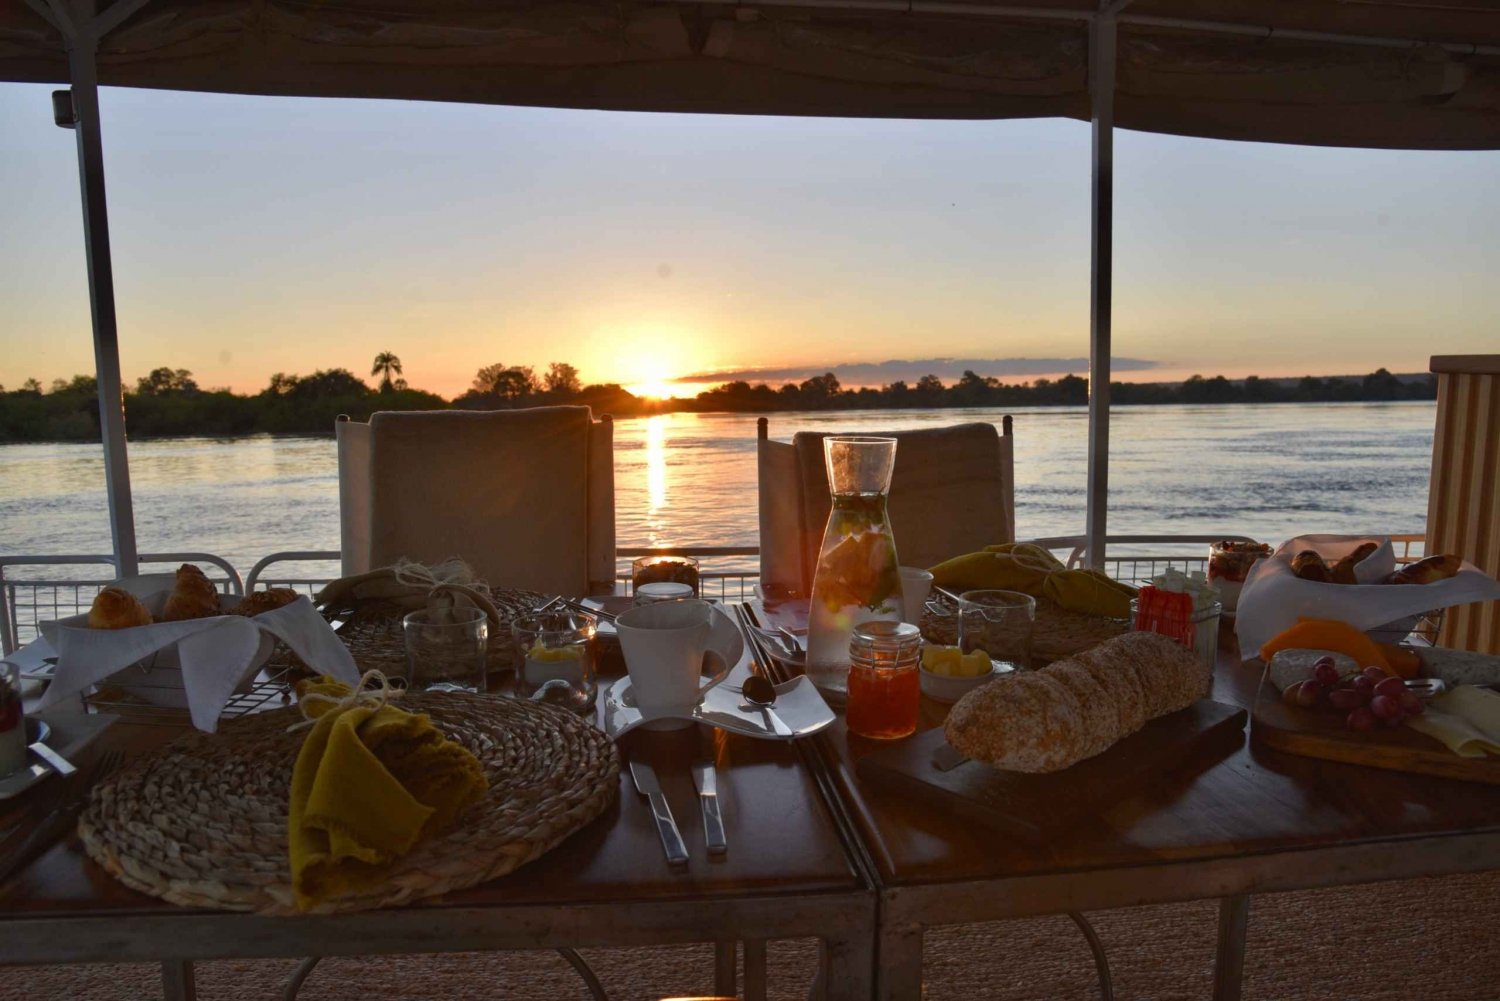 Victoria Falls: Sunrise Cruise on the Zambezi River